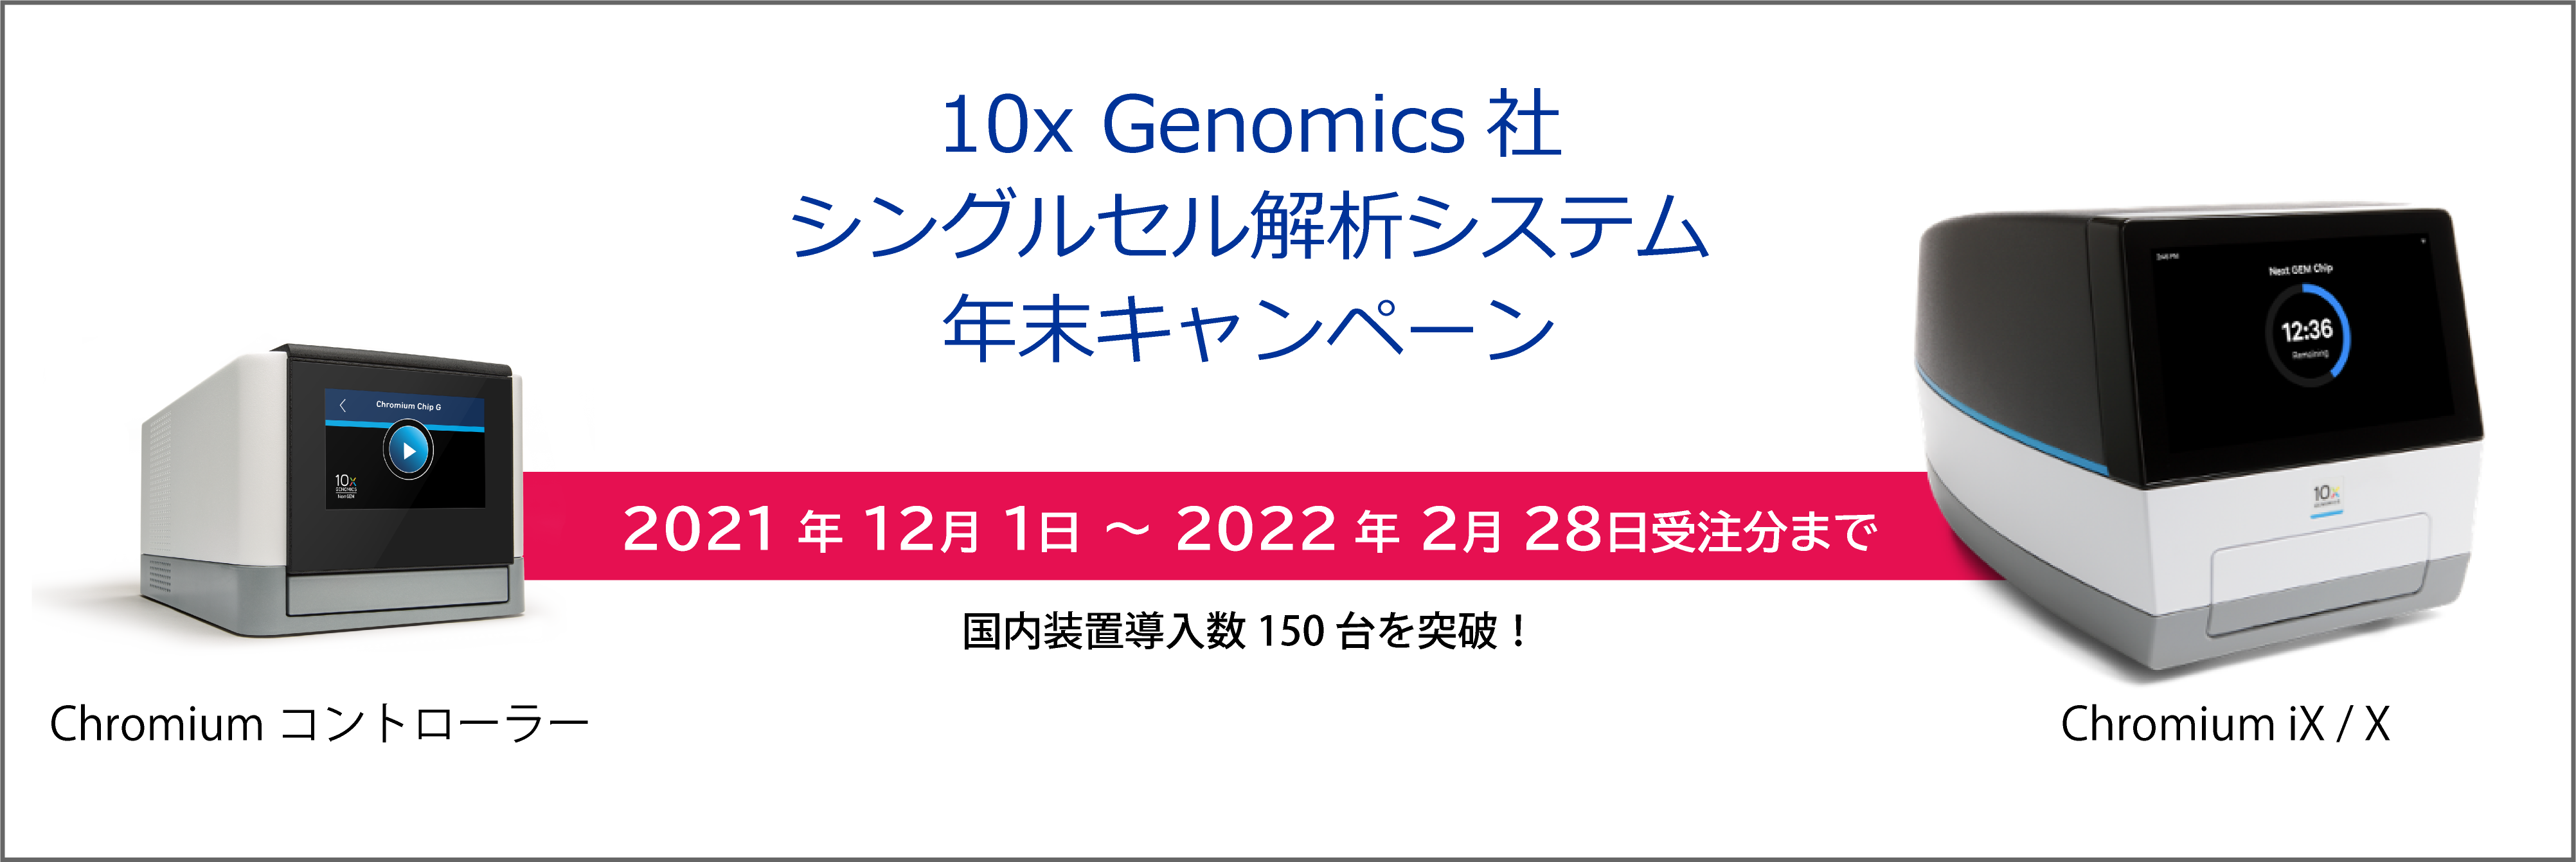 10x Genomics社 シングルセル解析システム 年末キャンペーン